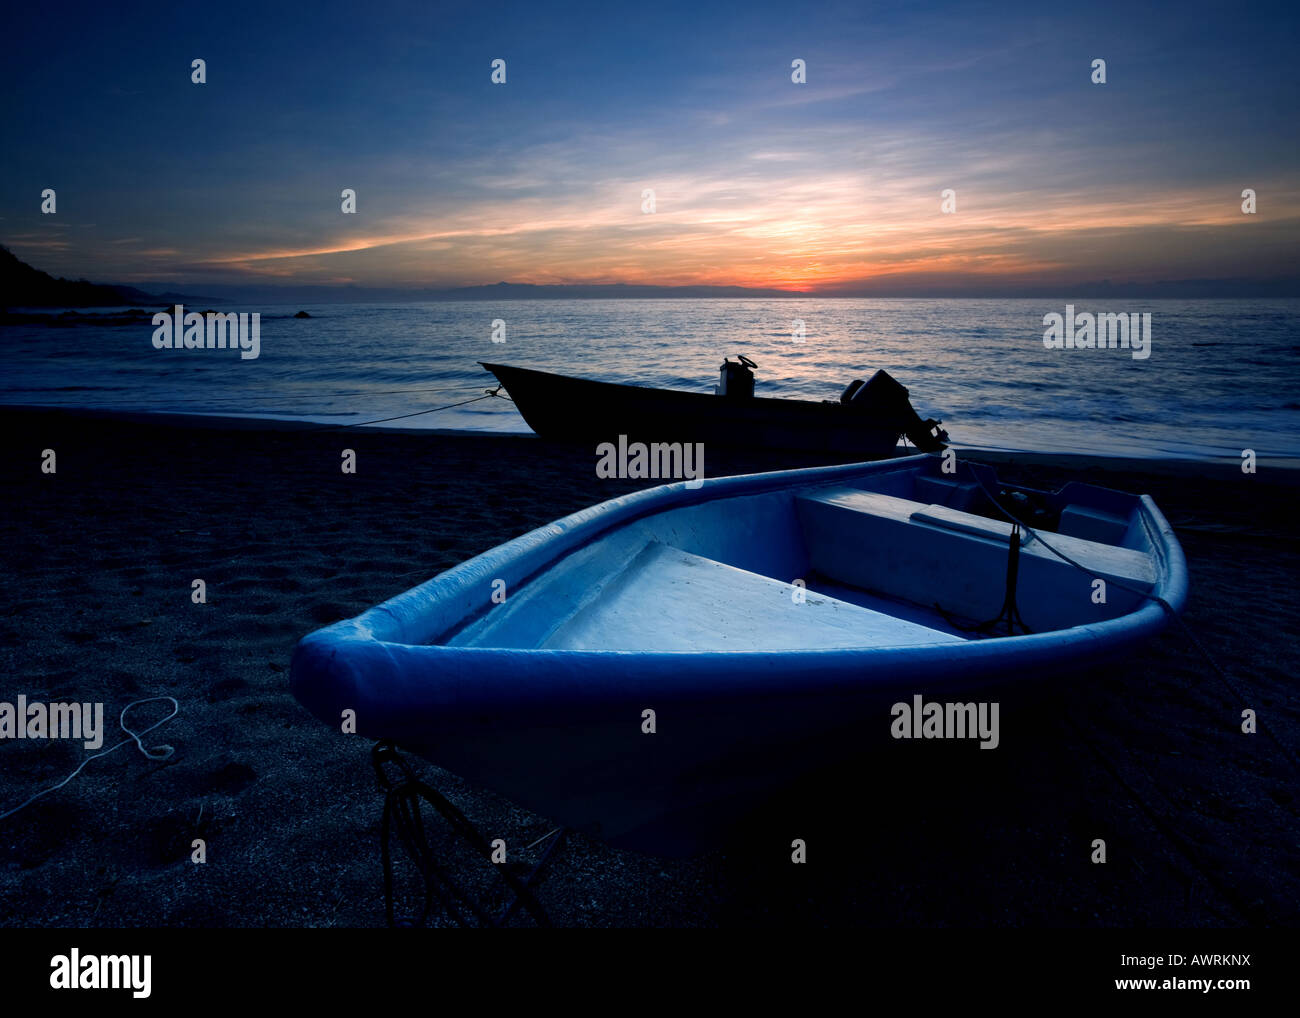 Two boats at sunrise in Montezuma, Costa Rica Stock Photo